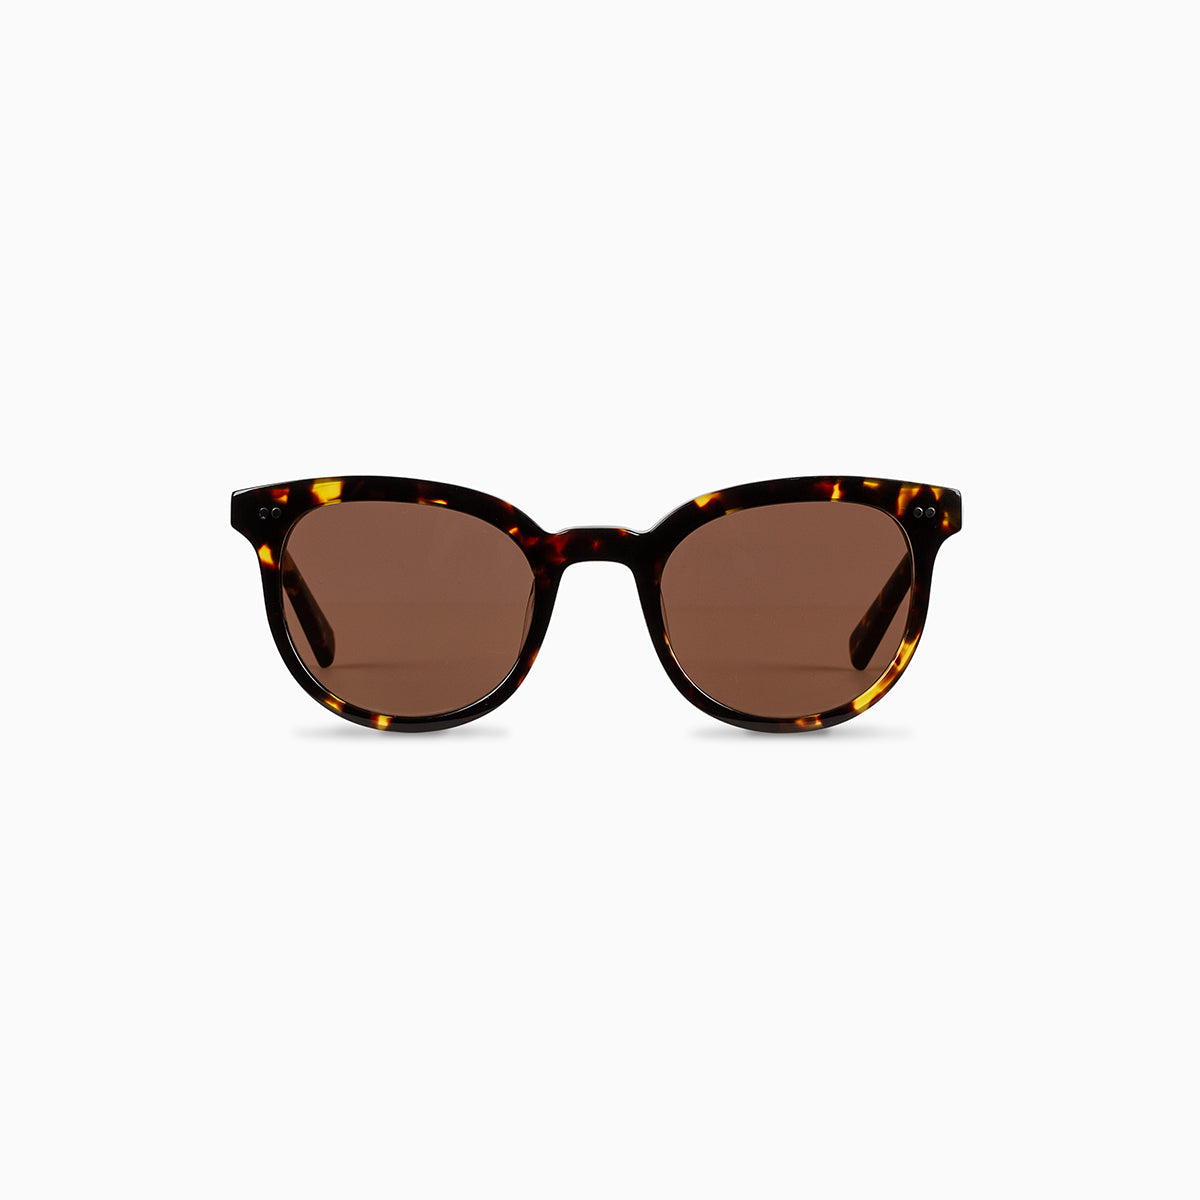 Round Wayfarer Sunglasses | Tort | Product Image | Uncommon James Home